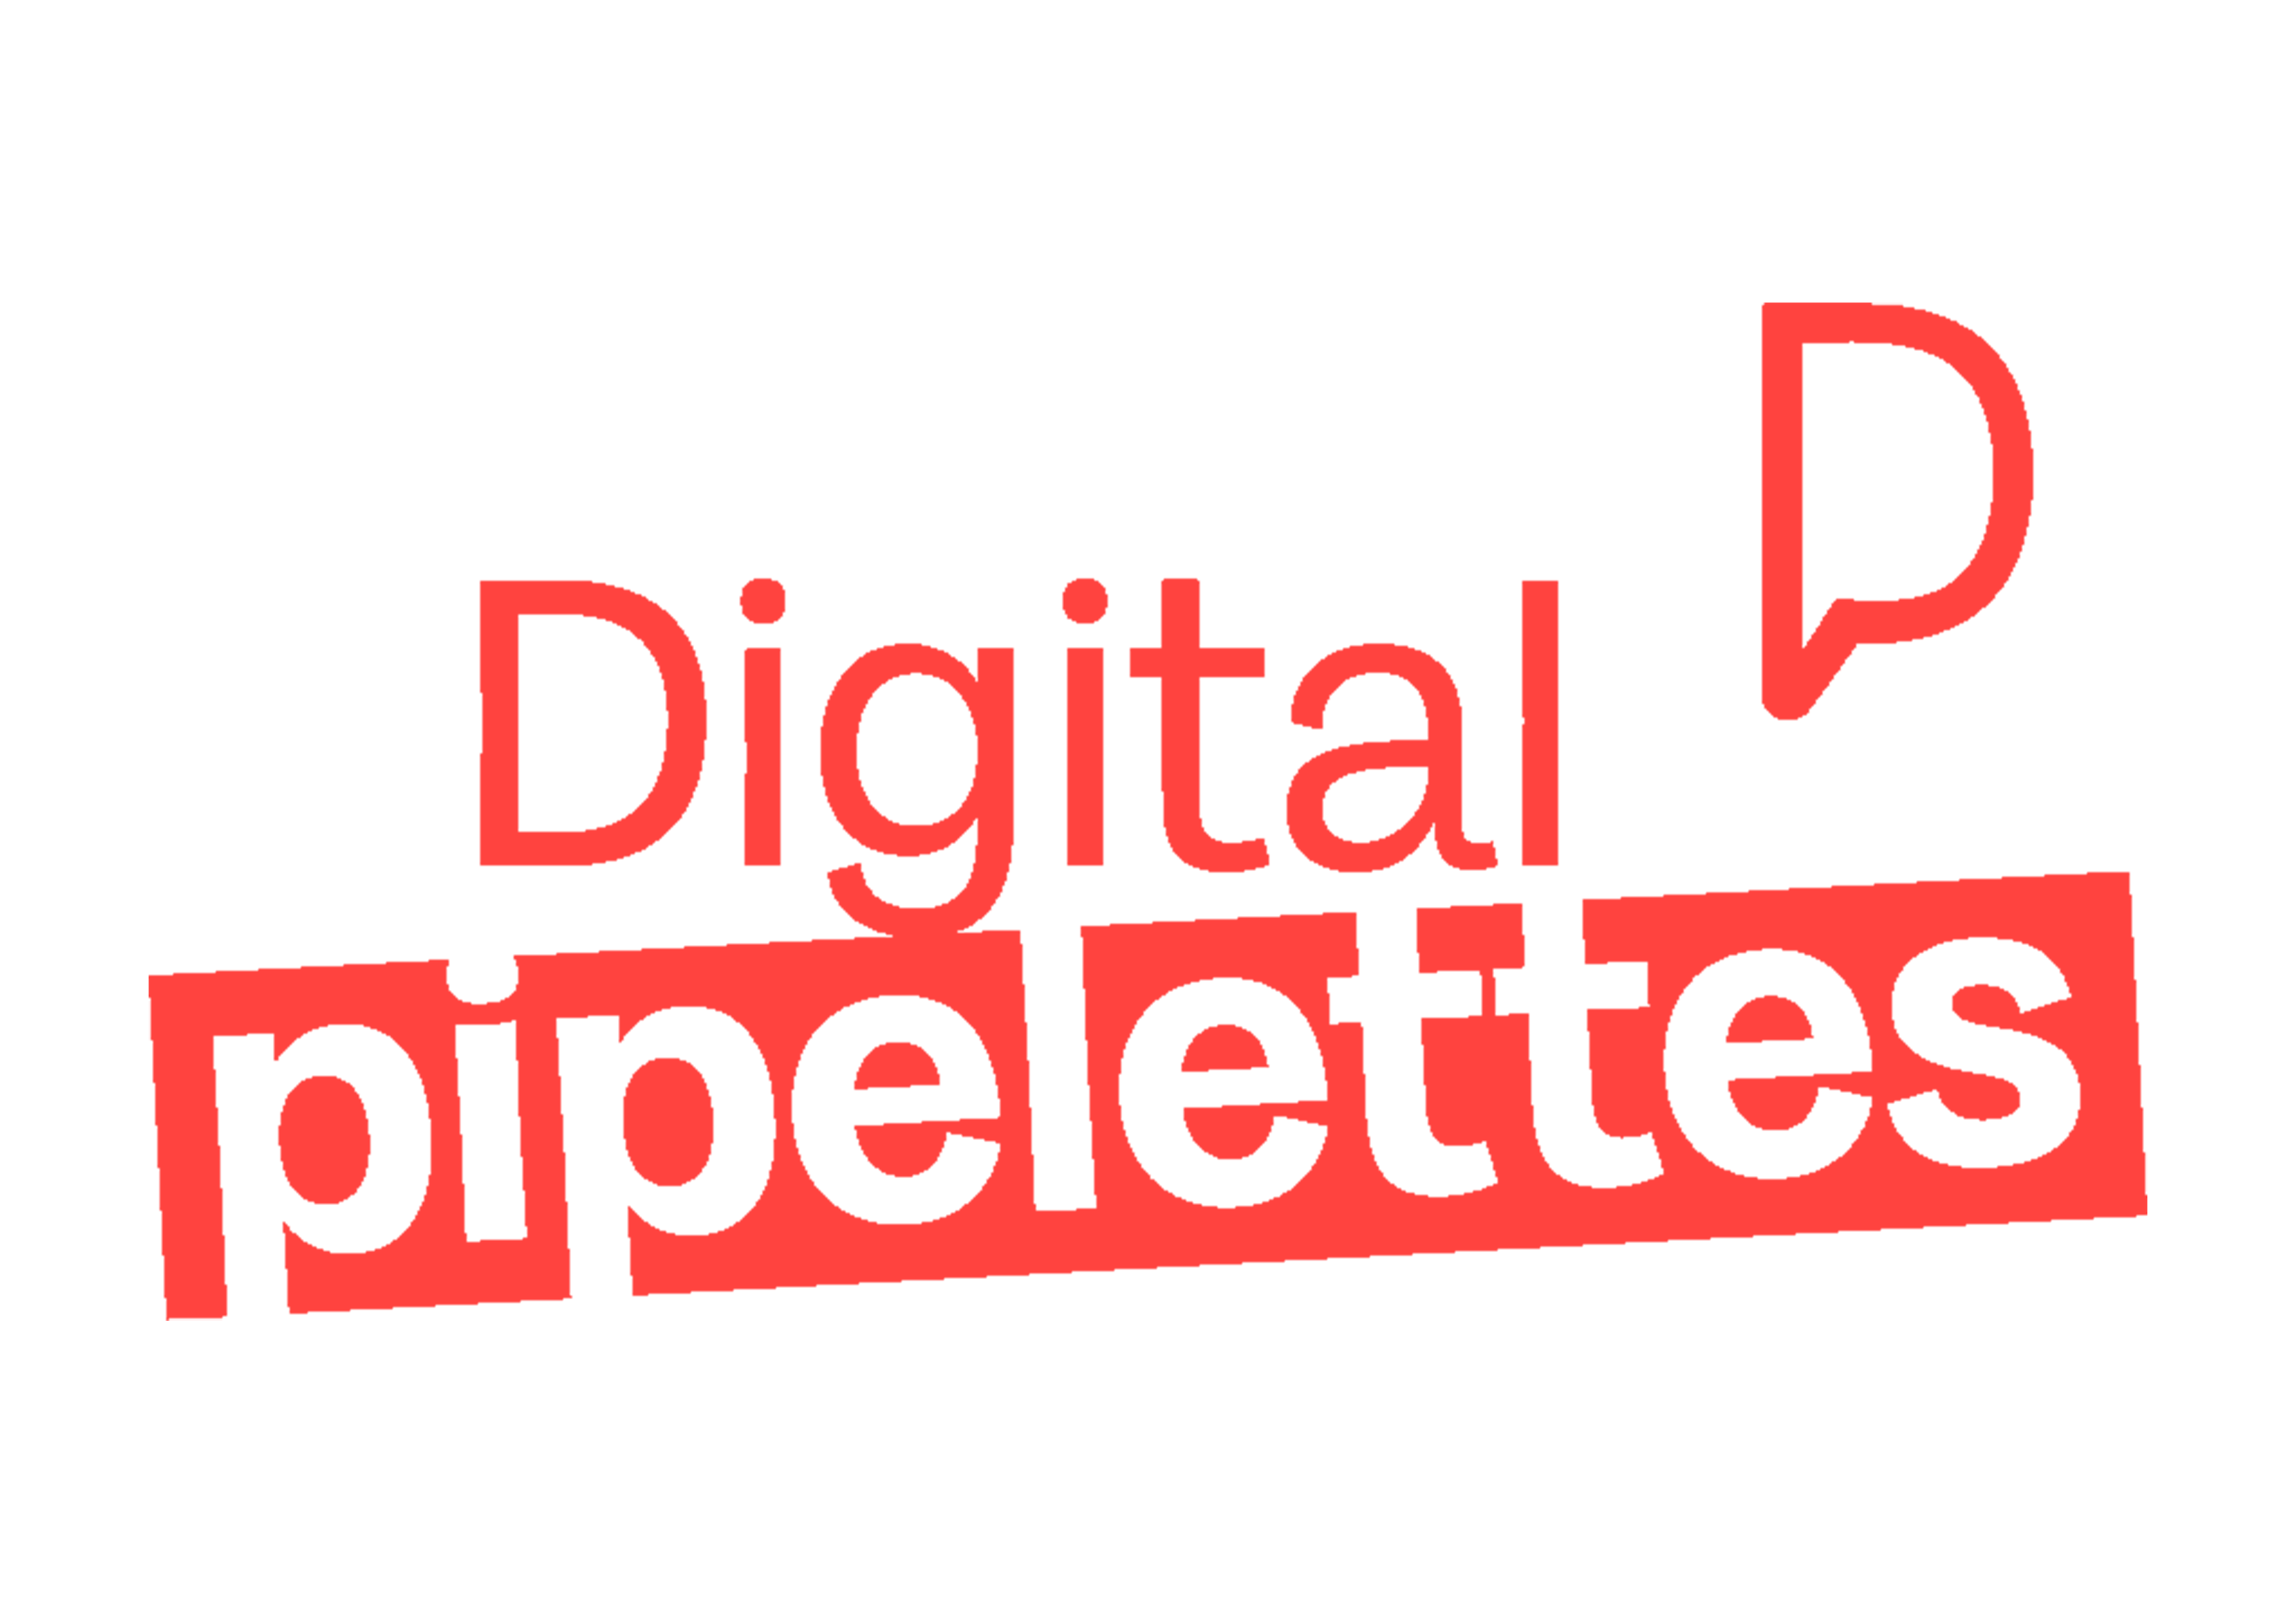 Digital Pipelettes